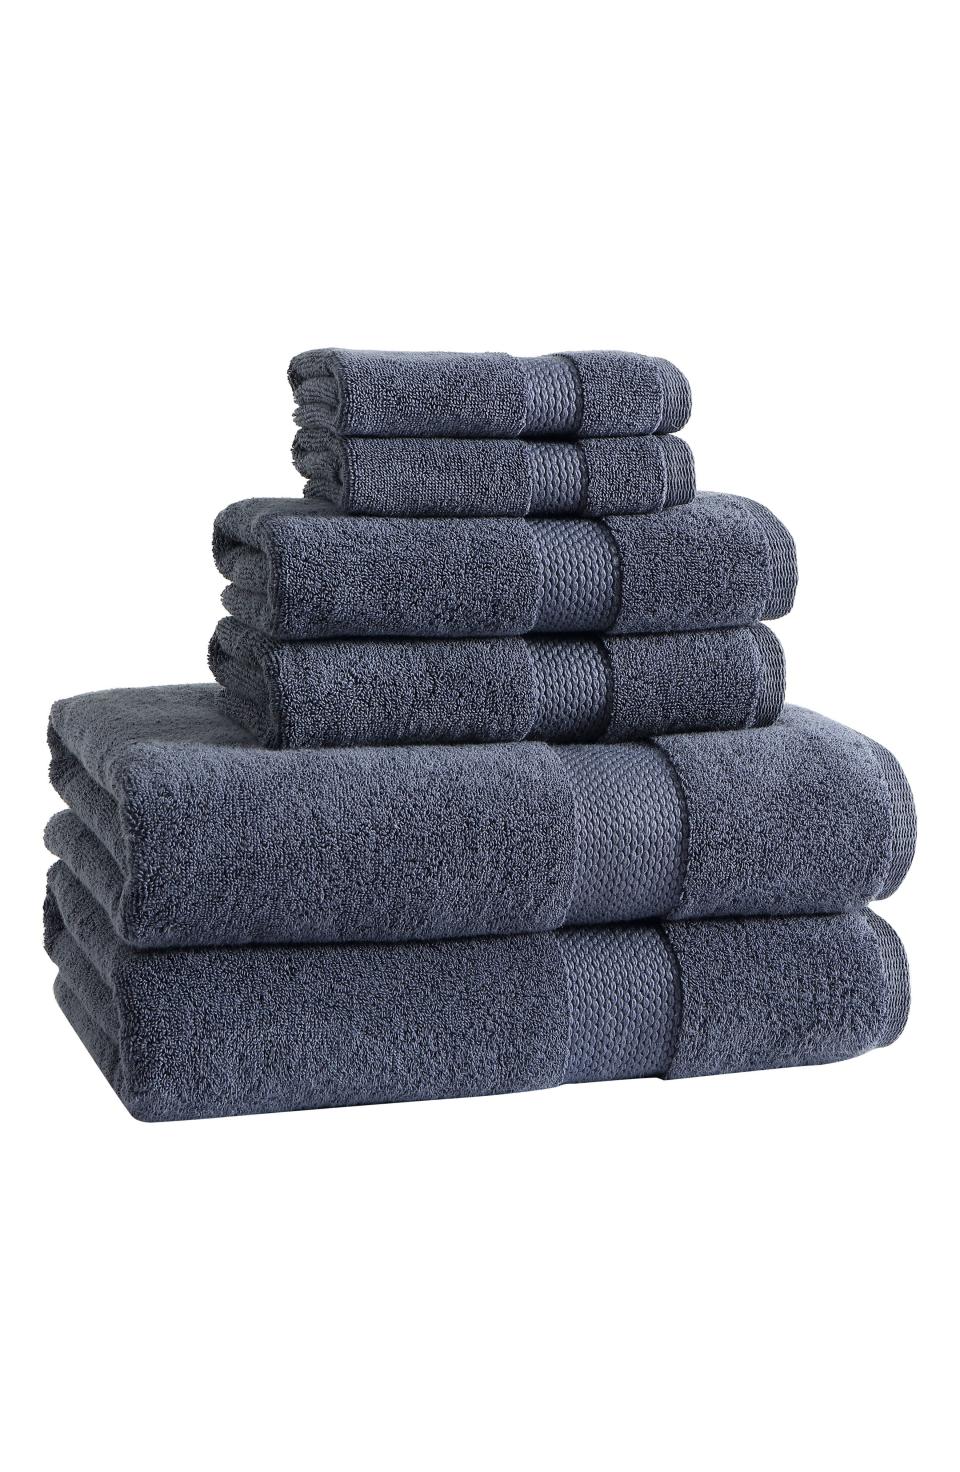 Basel 6-Piece Towel Set